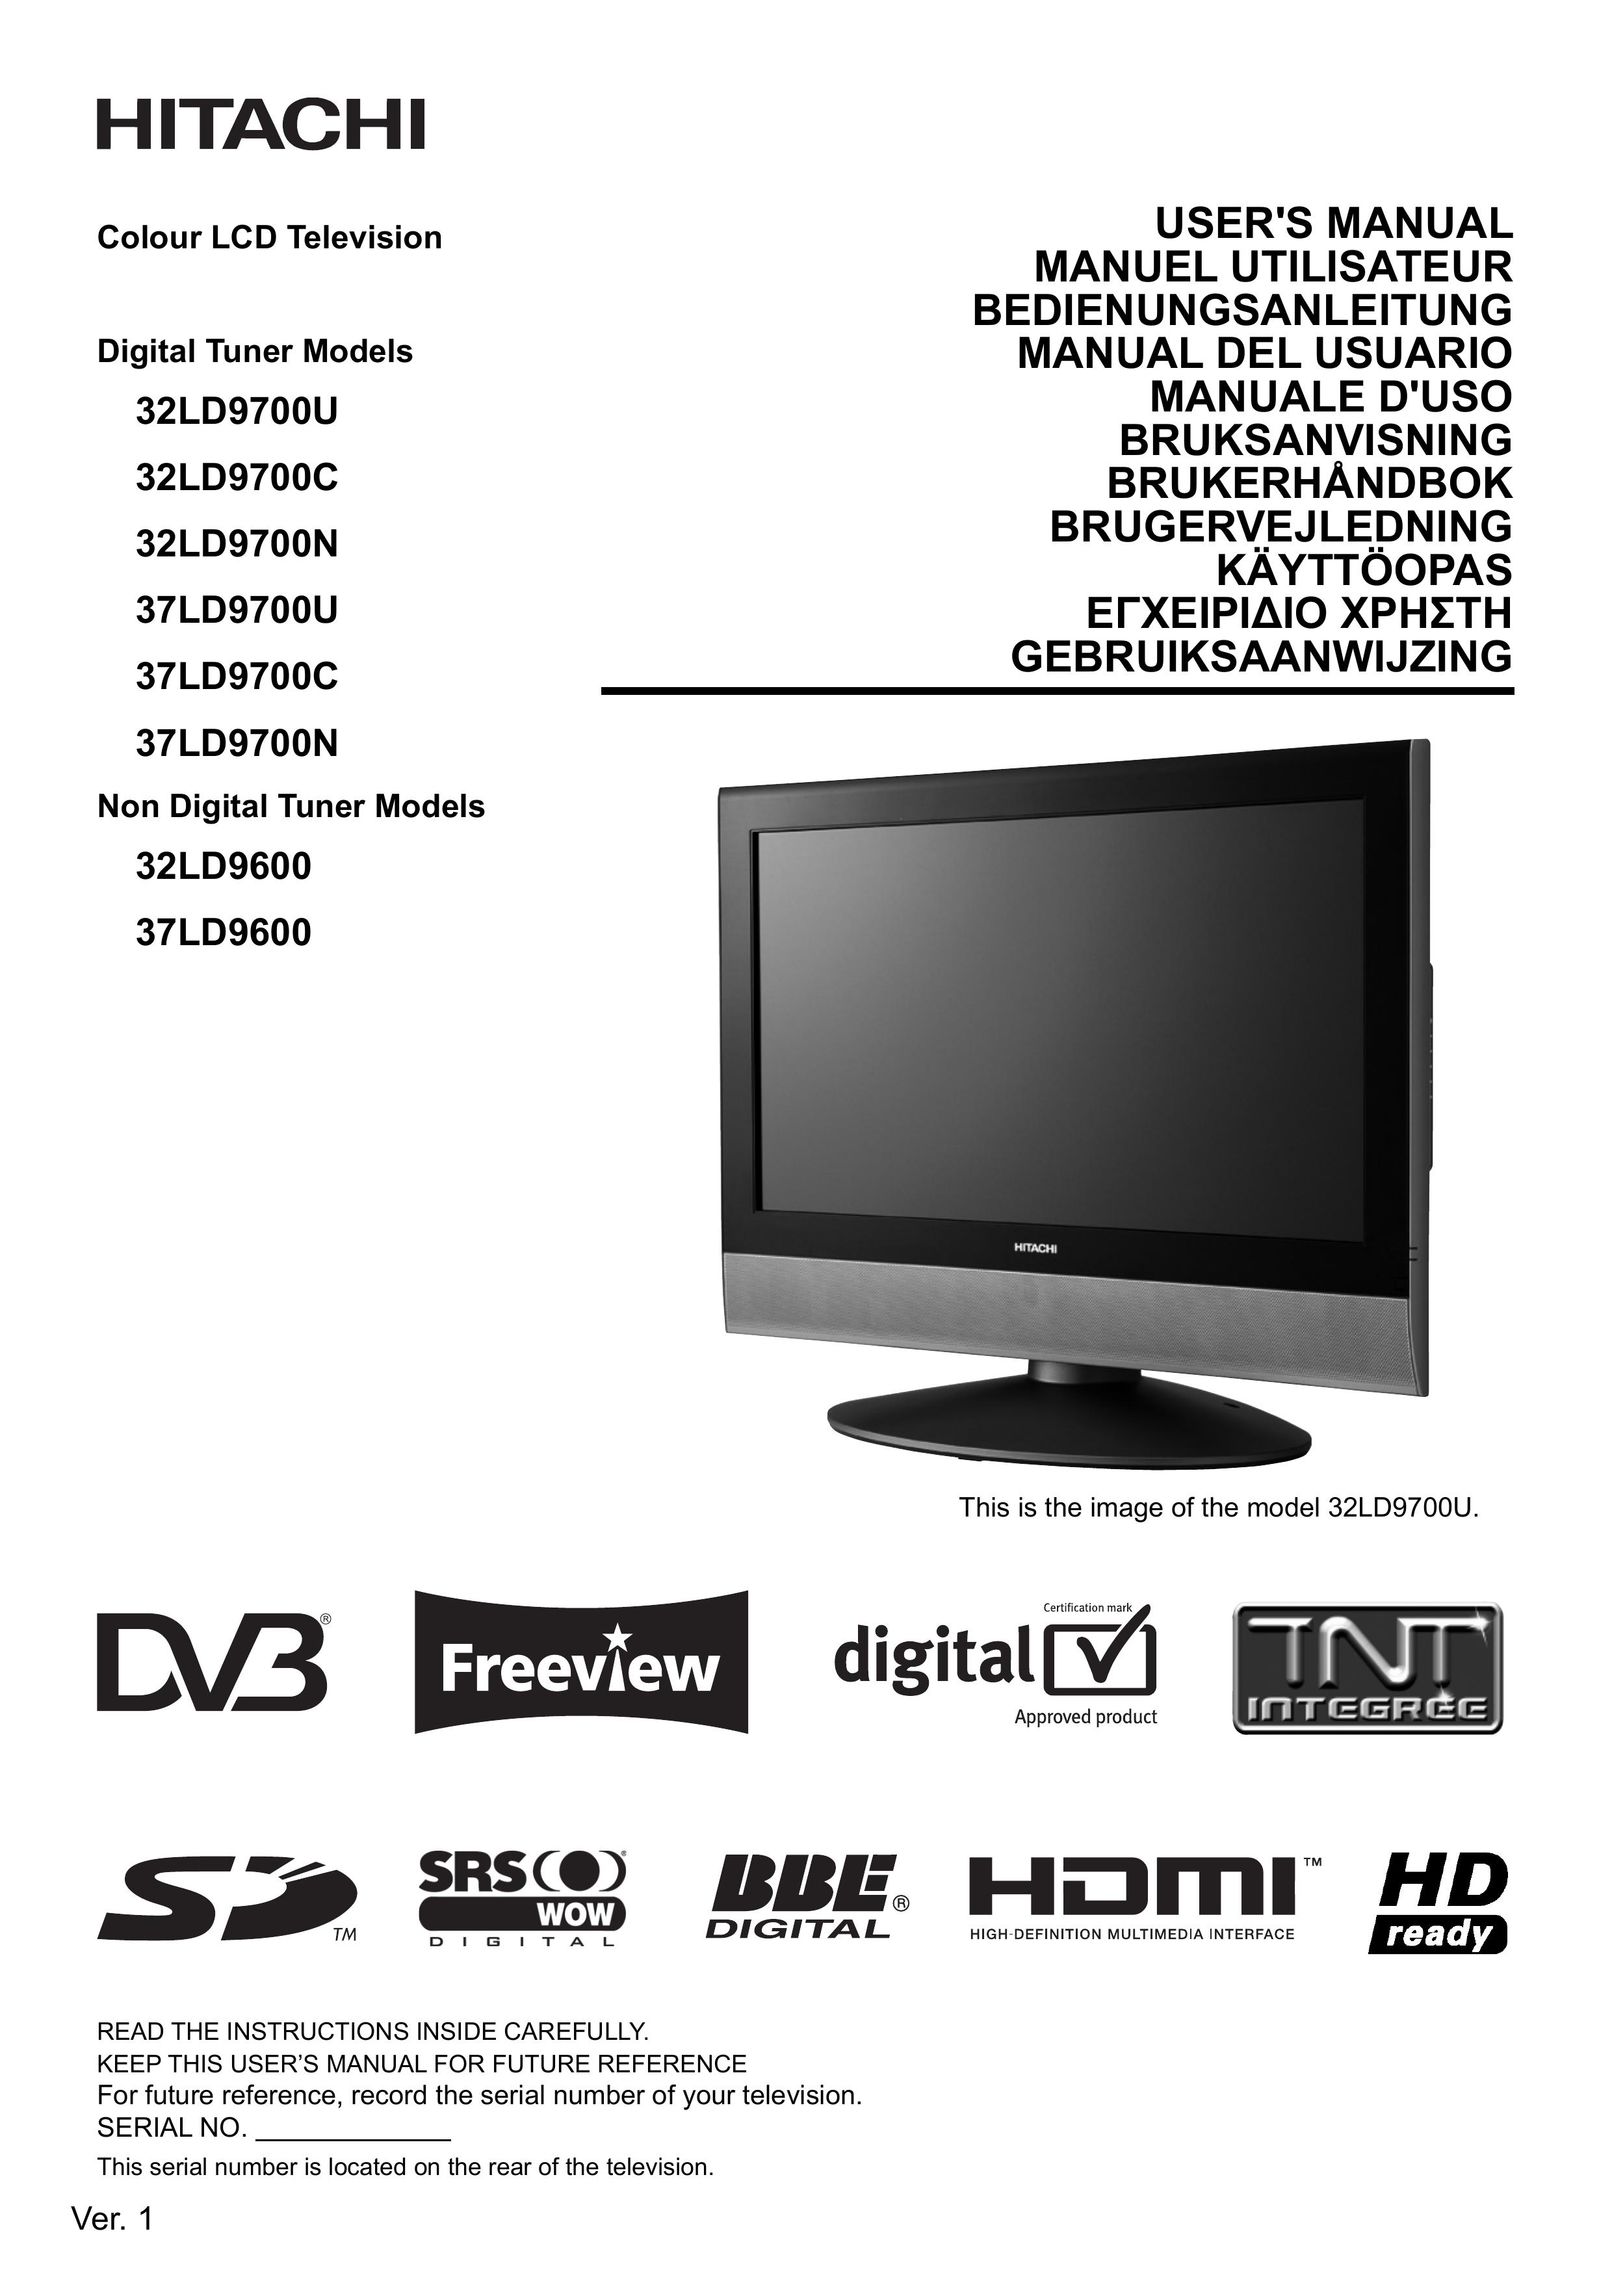 Hitachi 32LD9600 Flat Panel Television User Manual